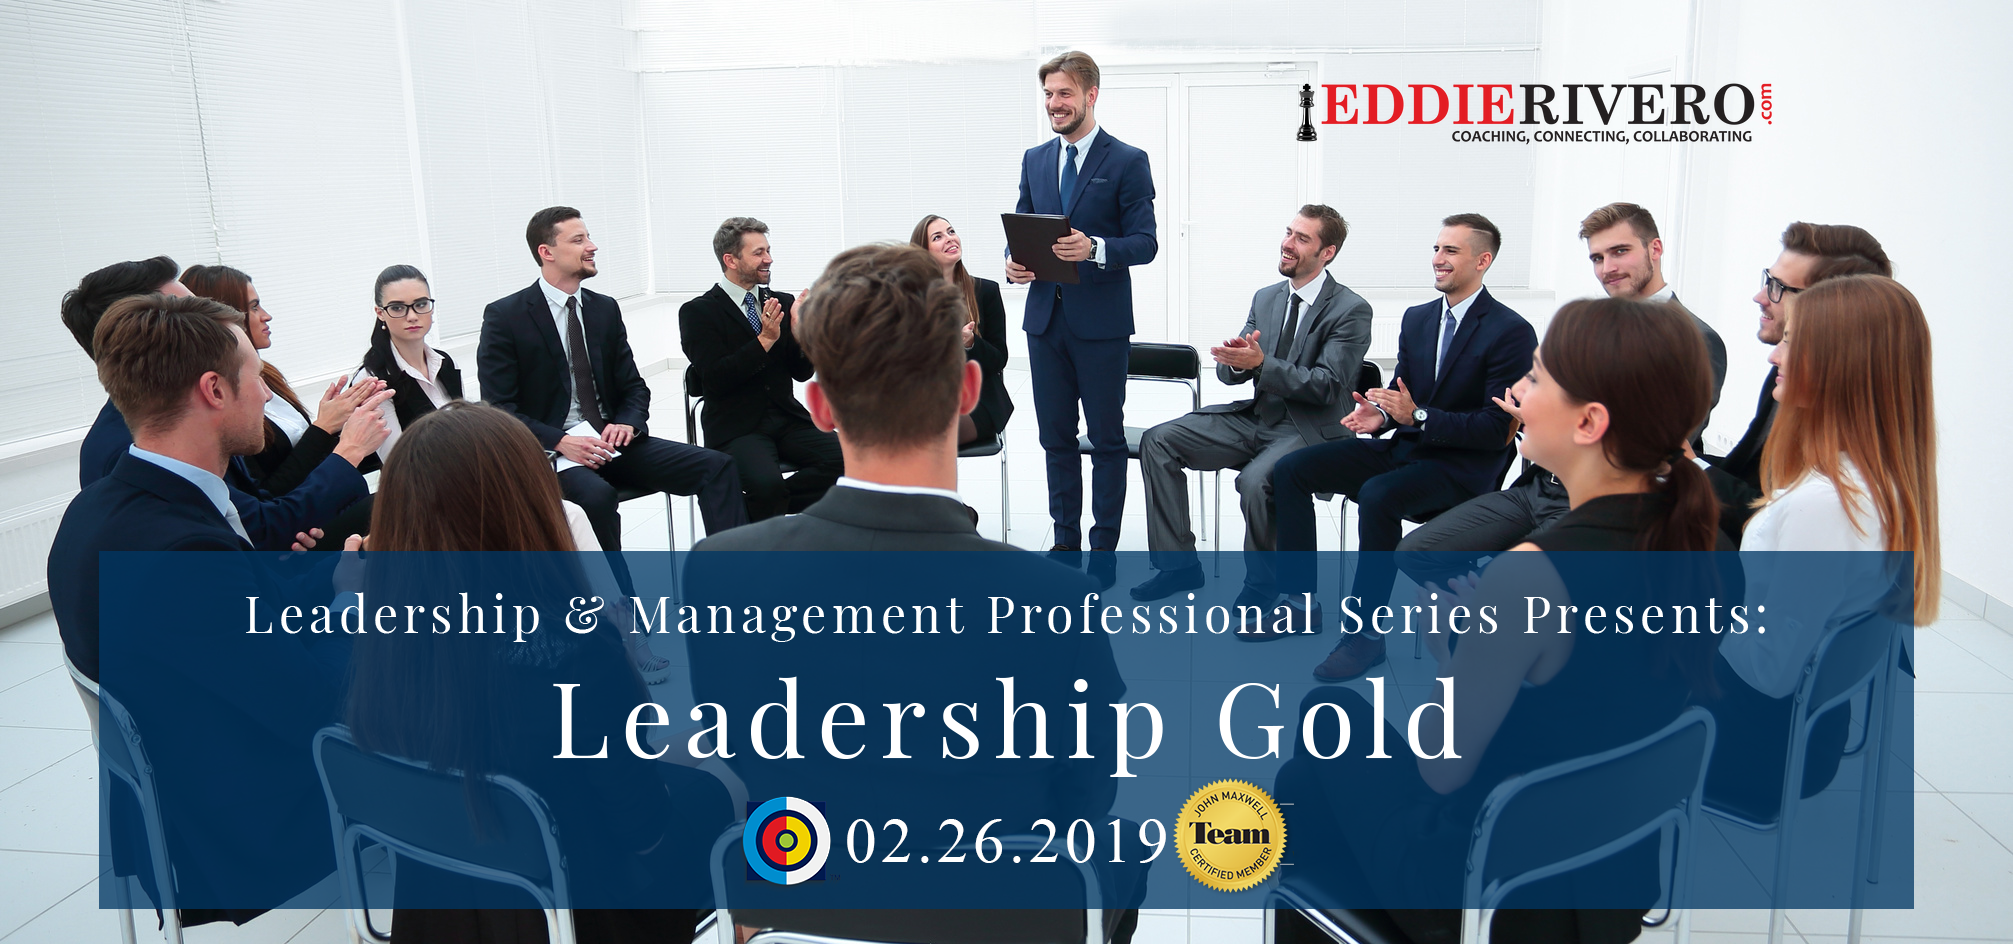 Leadership & Management Professional Series Presents: Leadership Gold, Miami-Dade, Florida, United States